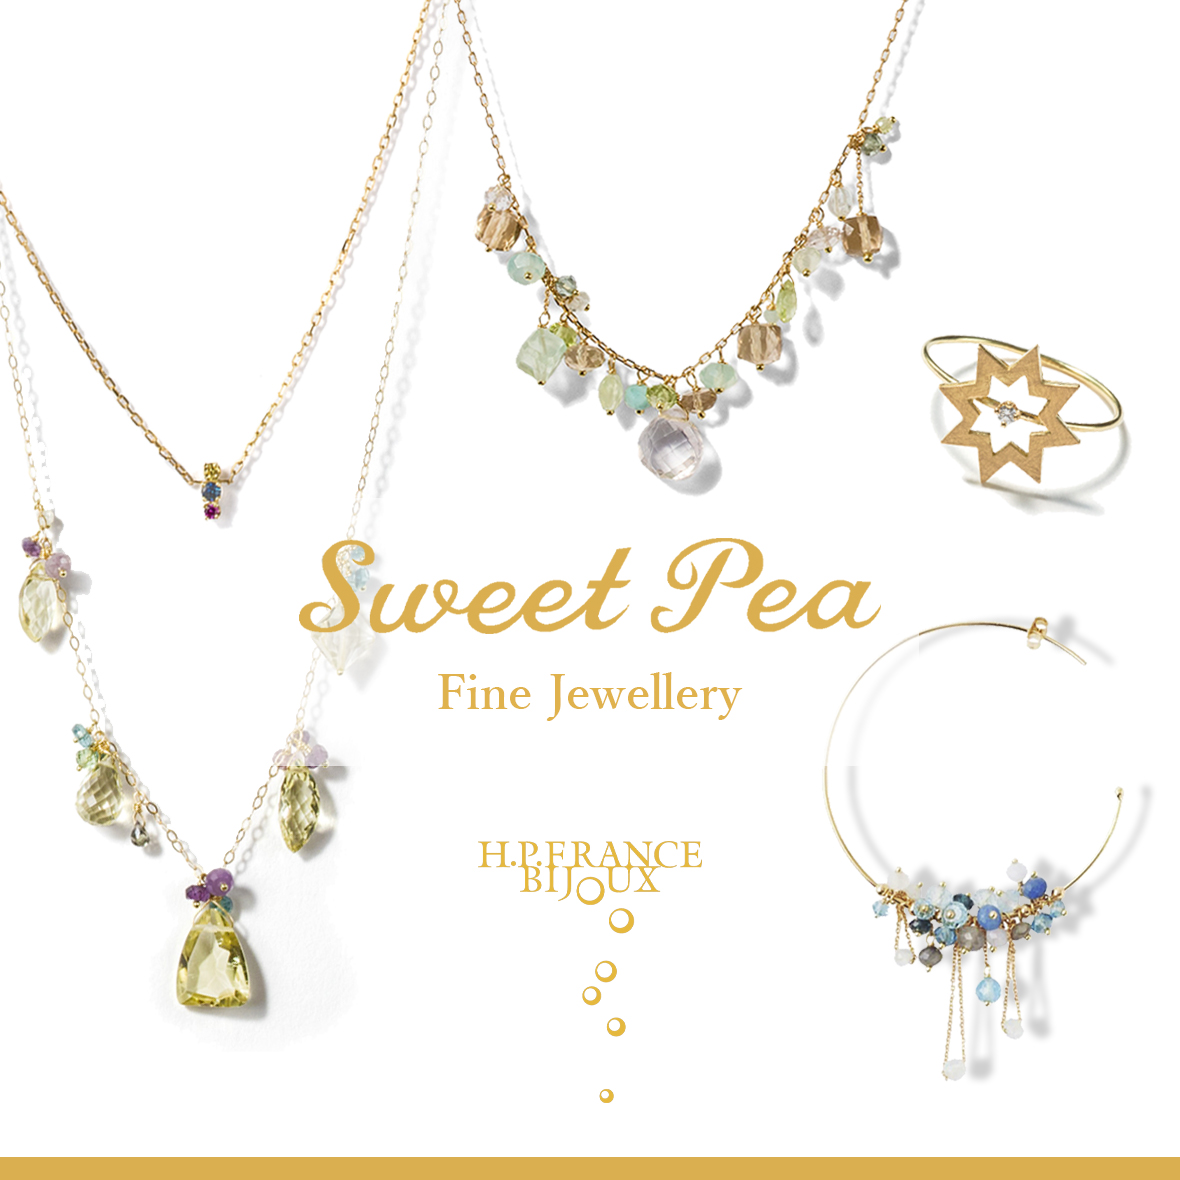 SWEET PEA Fine Jewellery | H.P.FRNACE BIJOUX | H.P.FRANCE公式サイト